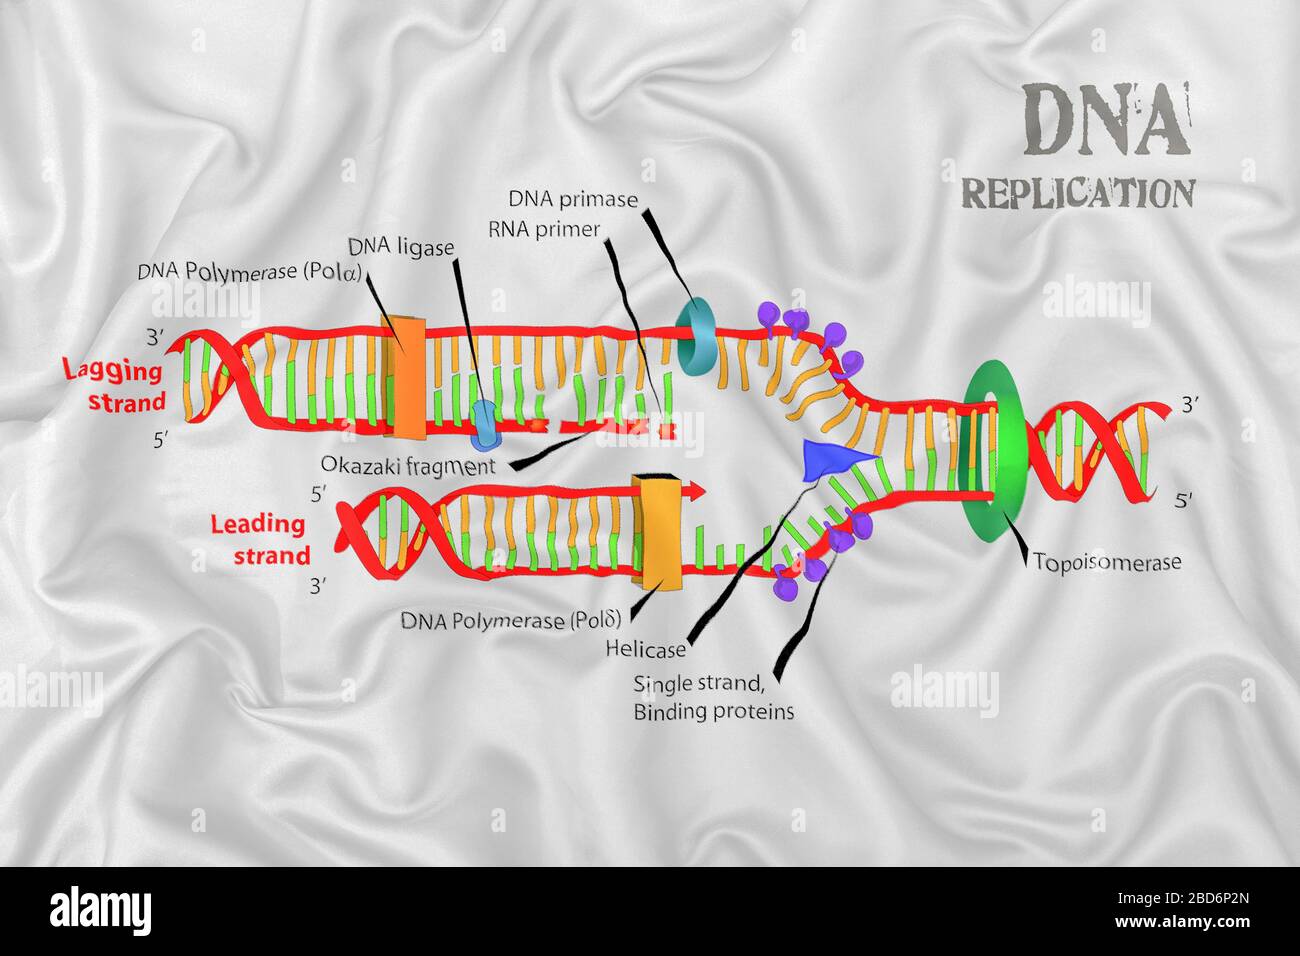 DNA replication schematics diagram on a silk satin fabric texture. Stock Photo